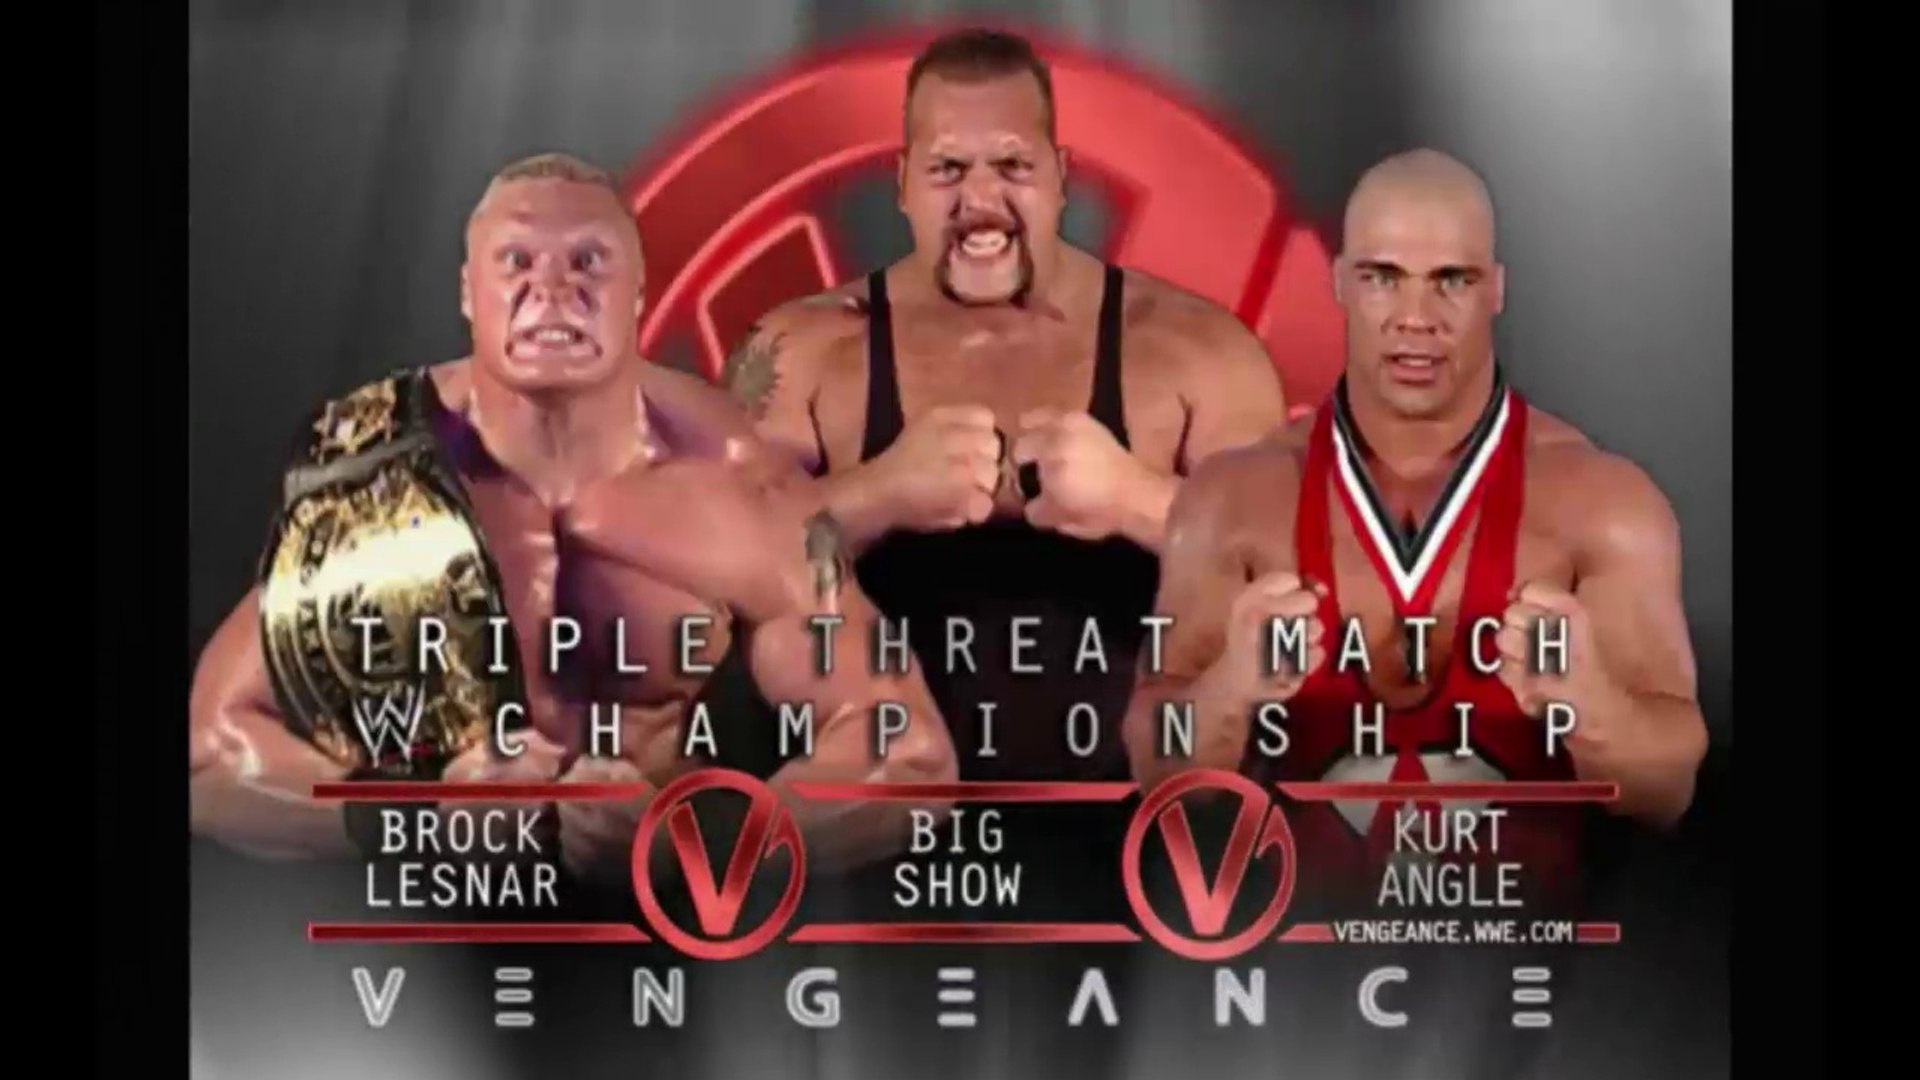 Vengeance 2003 Brock Lesnar Vs Big Show Vs Kurt Angle - HD Wallpaper 